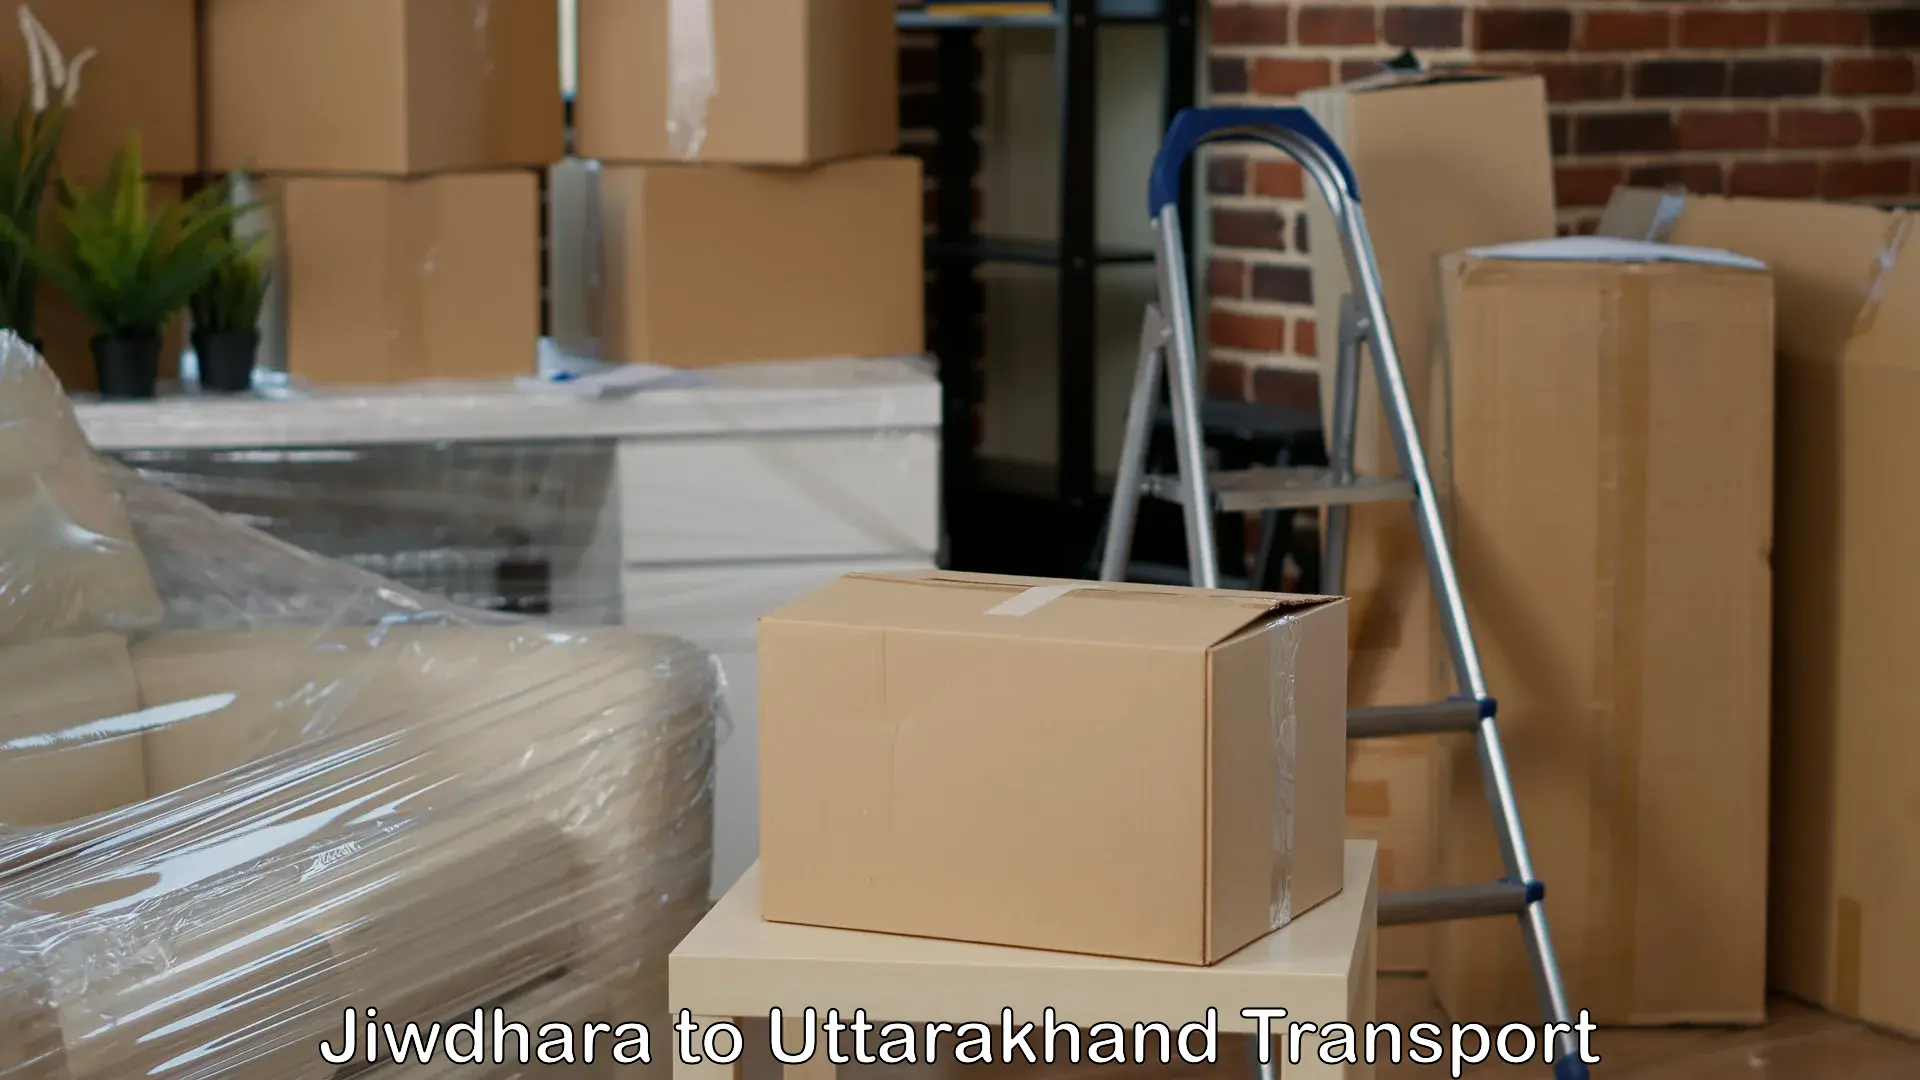 Goods delivery service in Jiwdhara to Dehradun